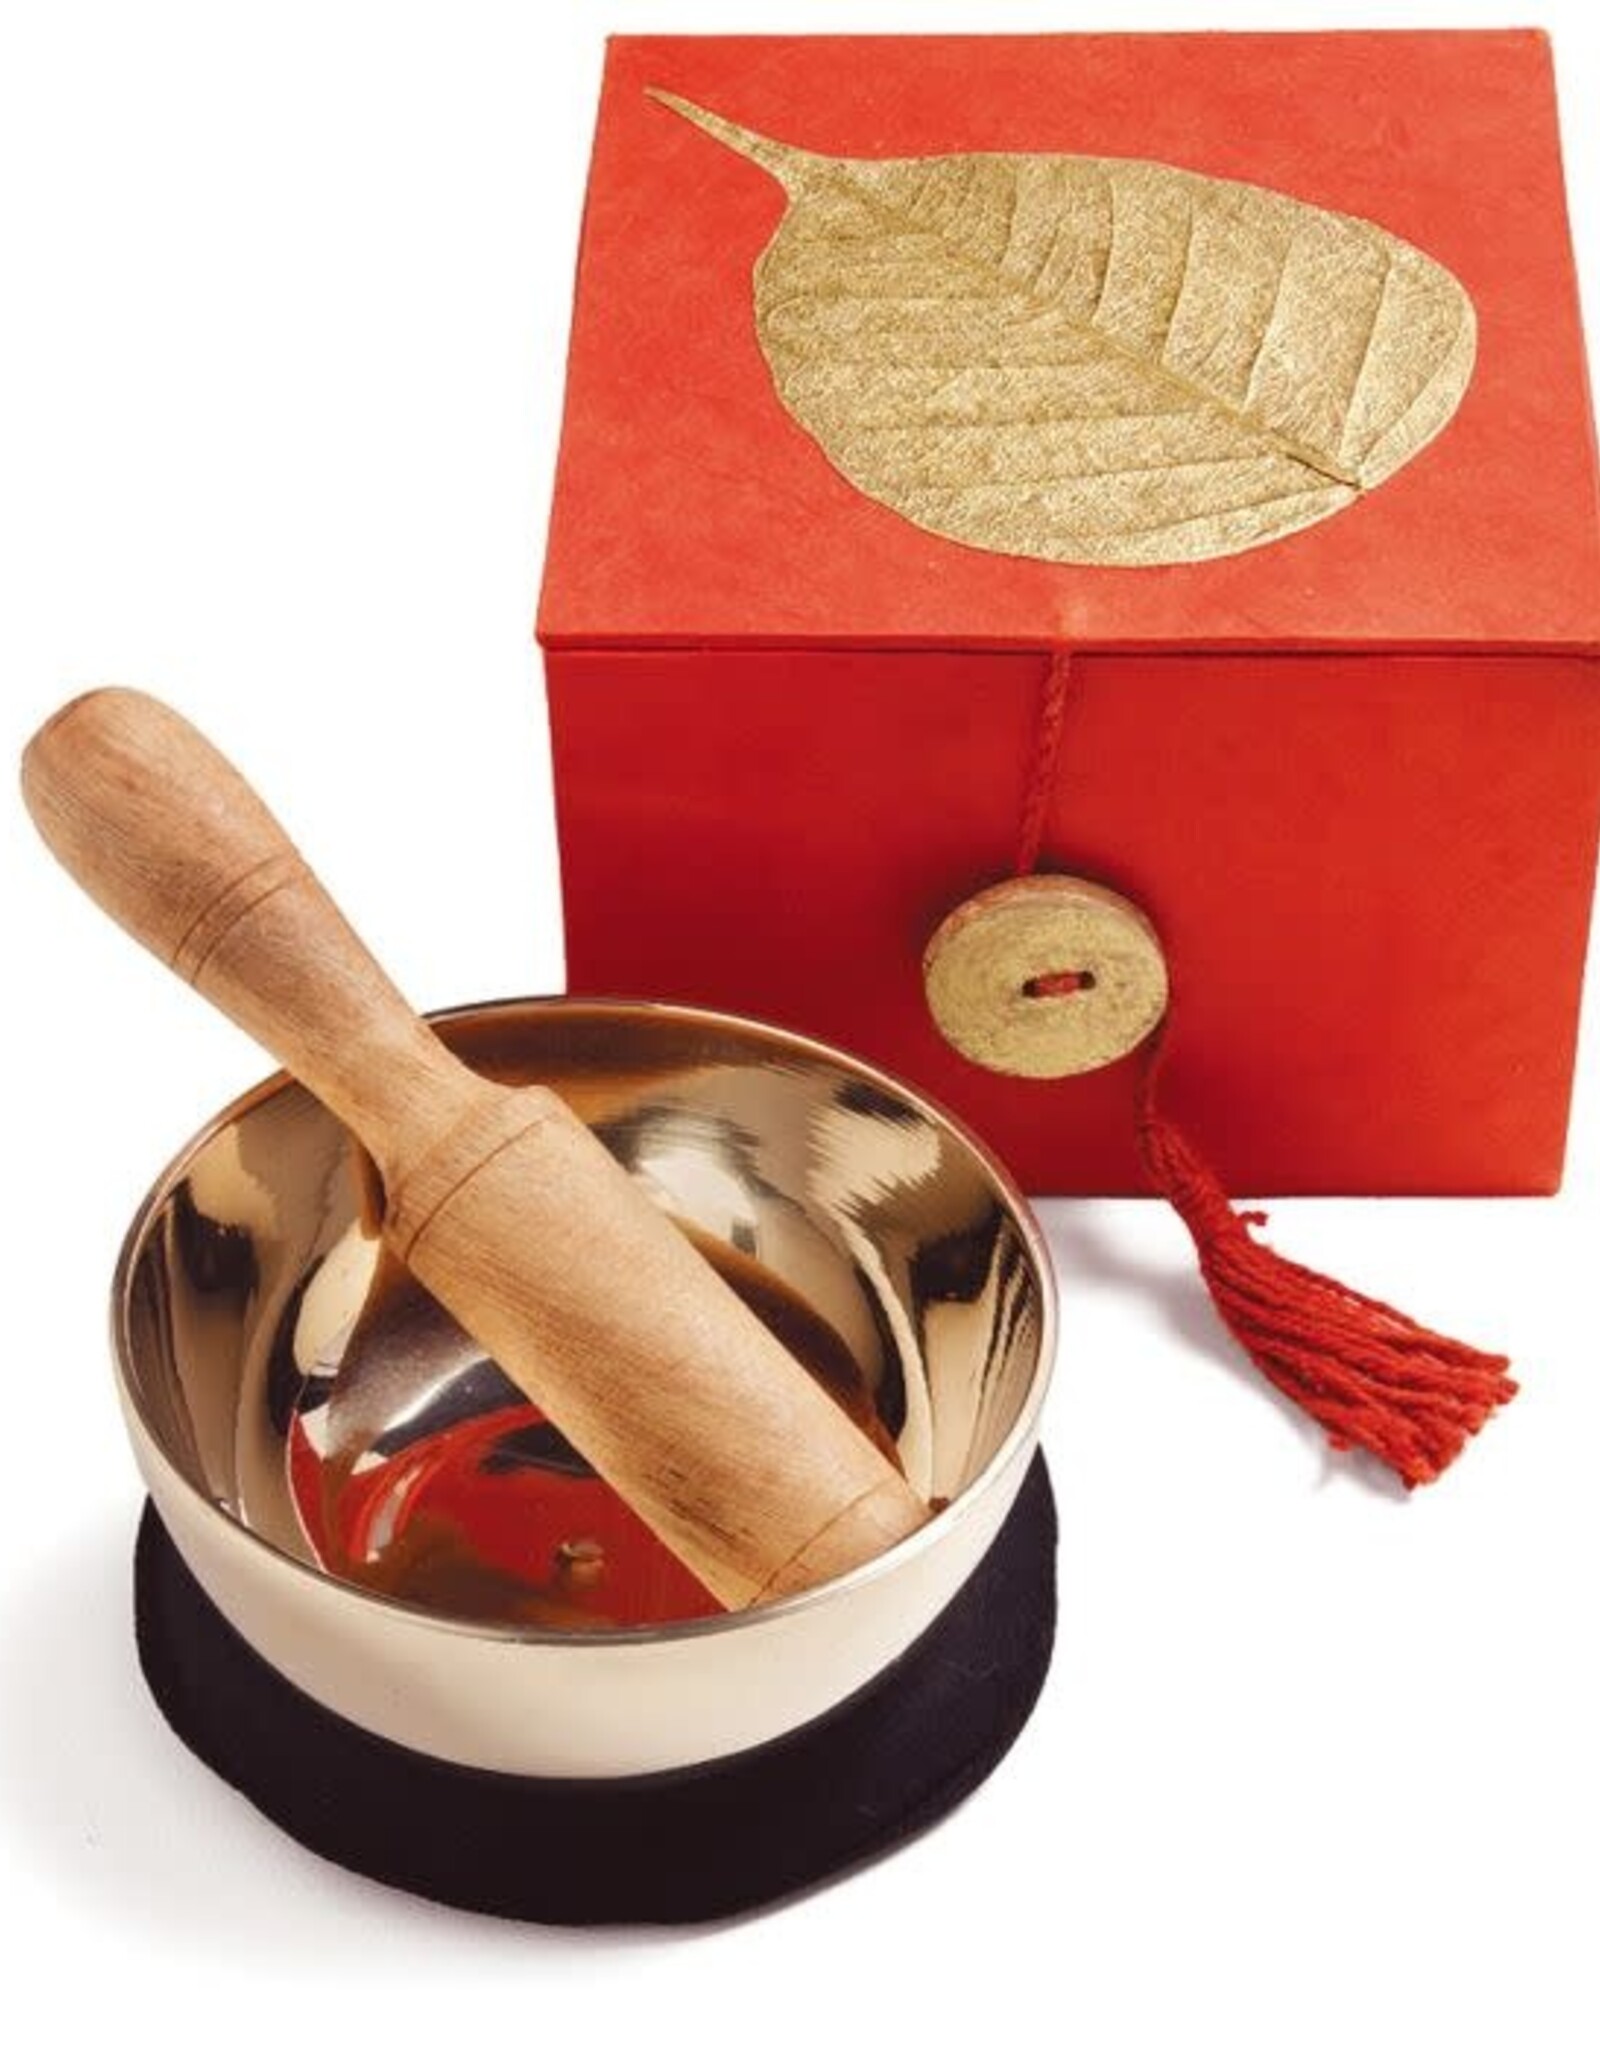 dZi Handmade Meditation Bowl Gold Bodhi